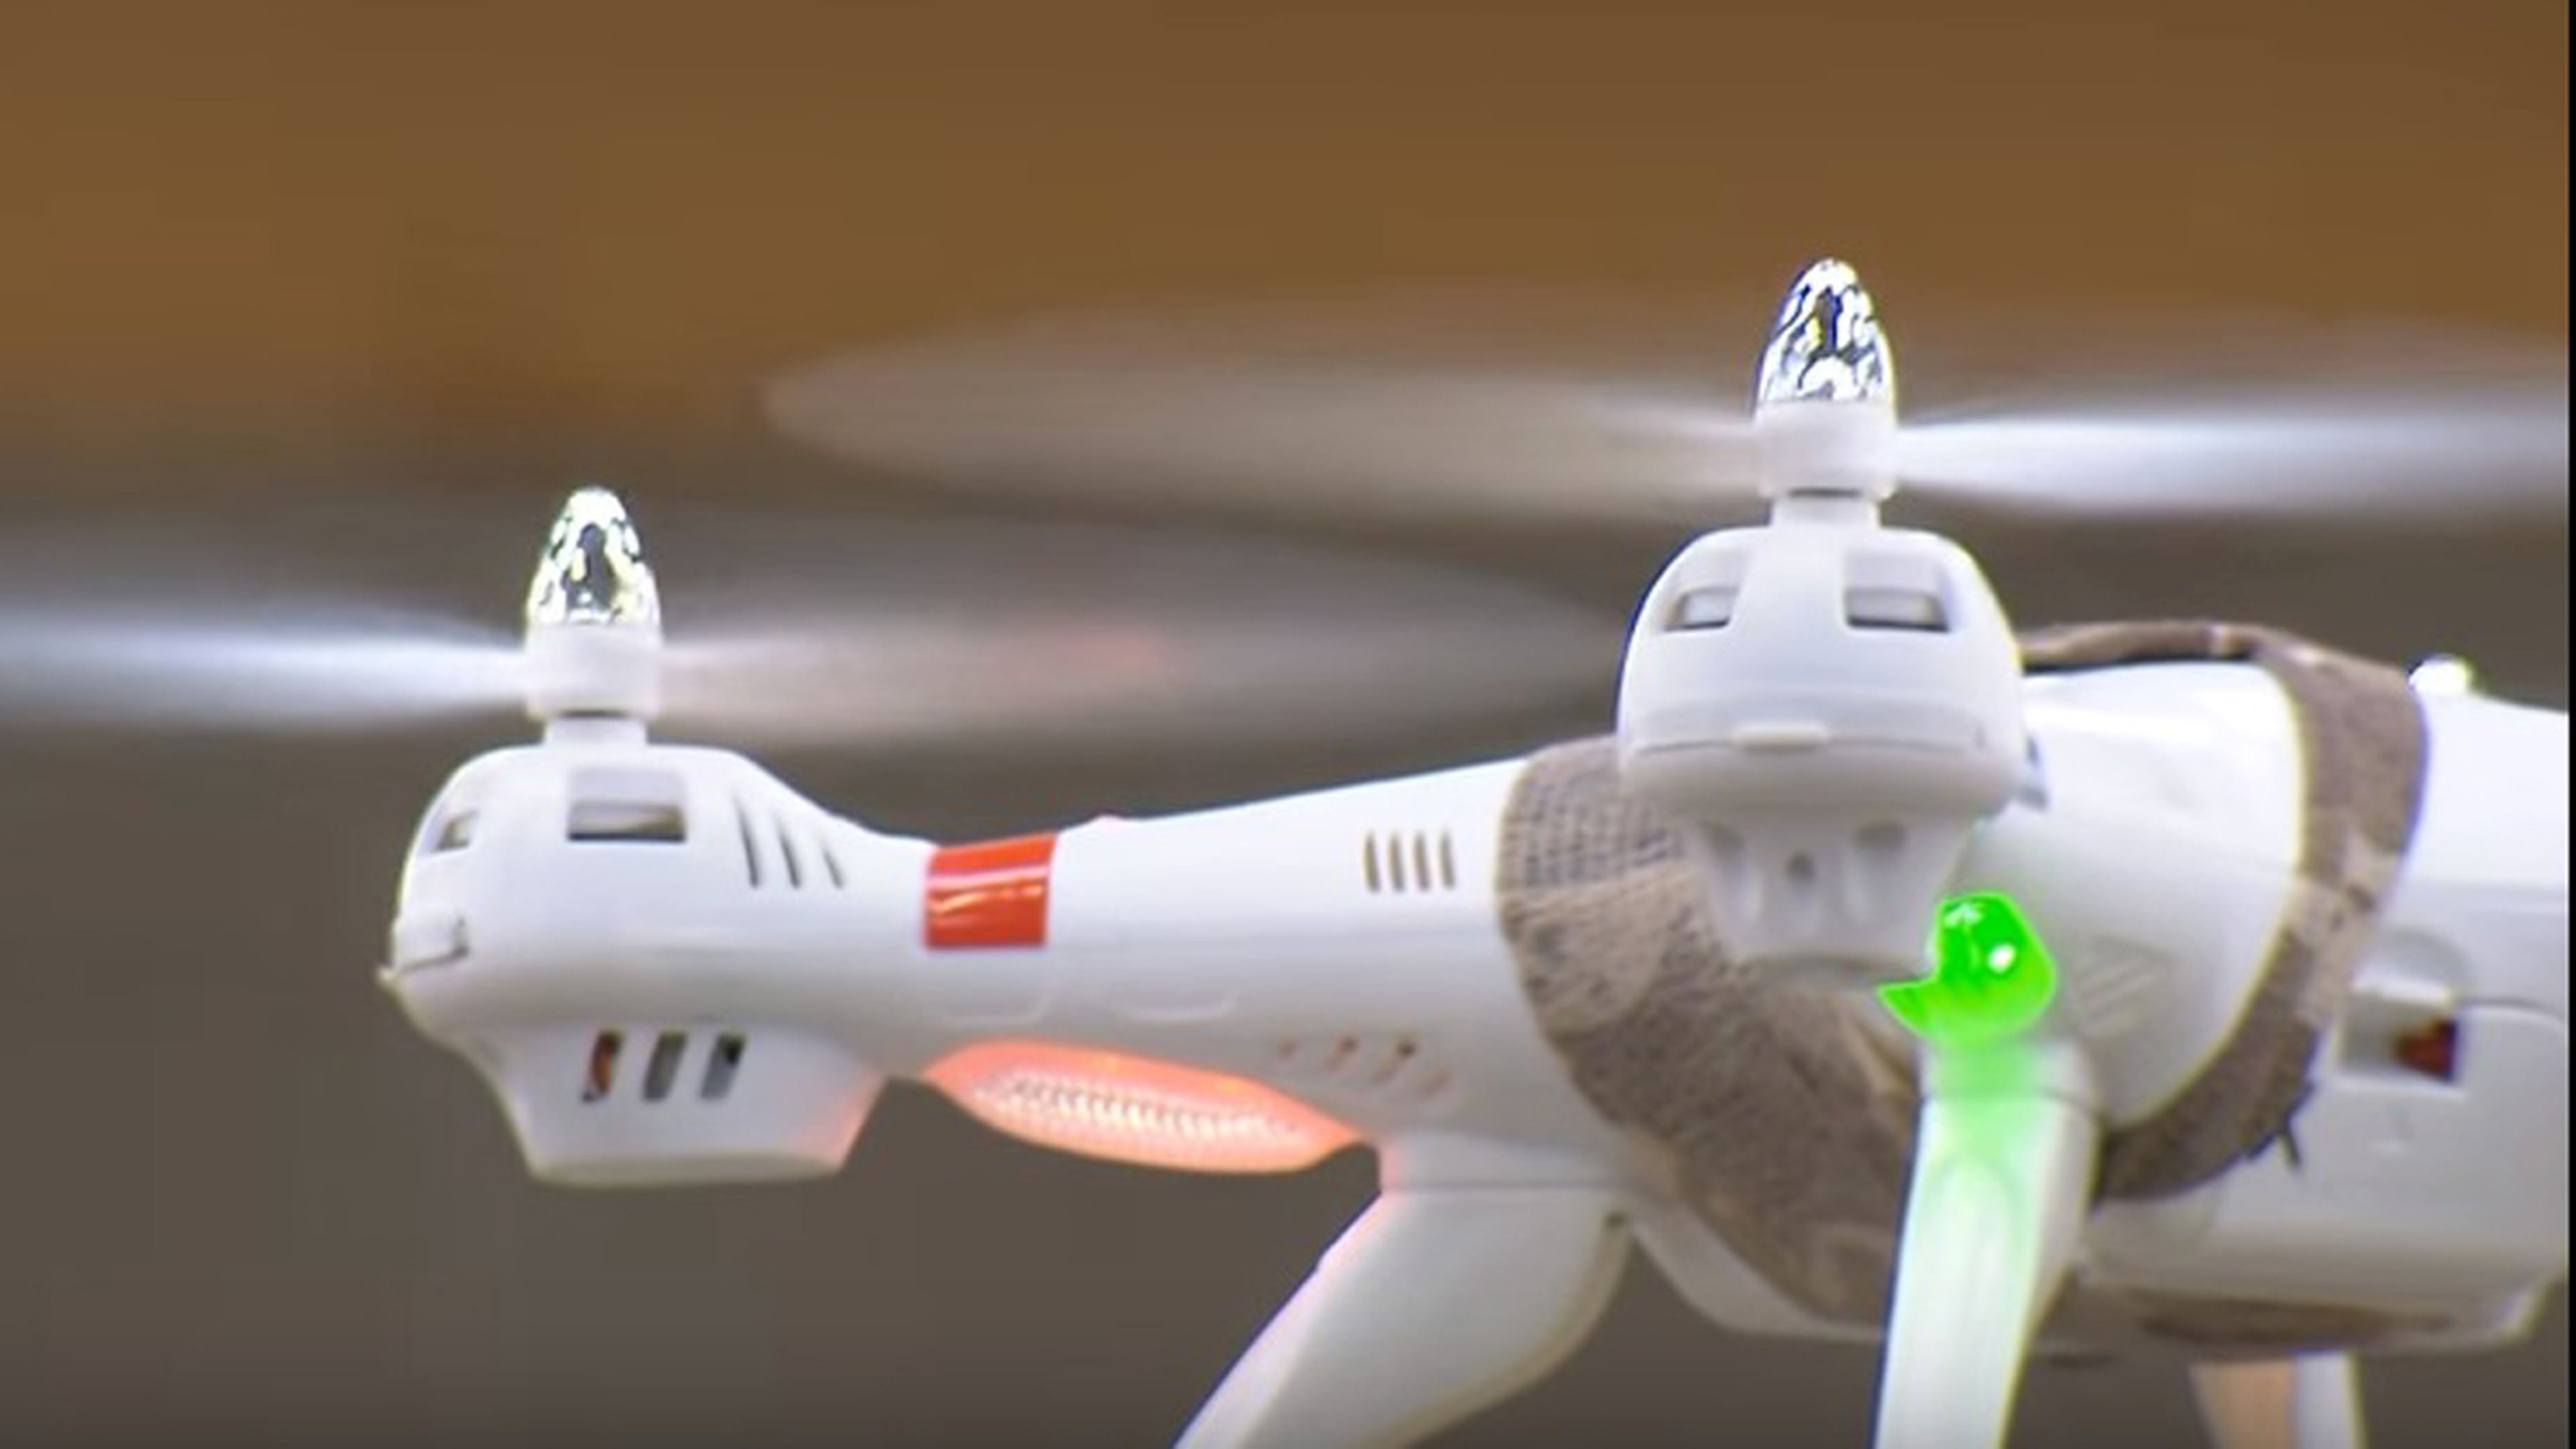 drones ilegales cazara aguila